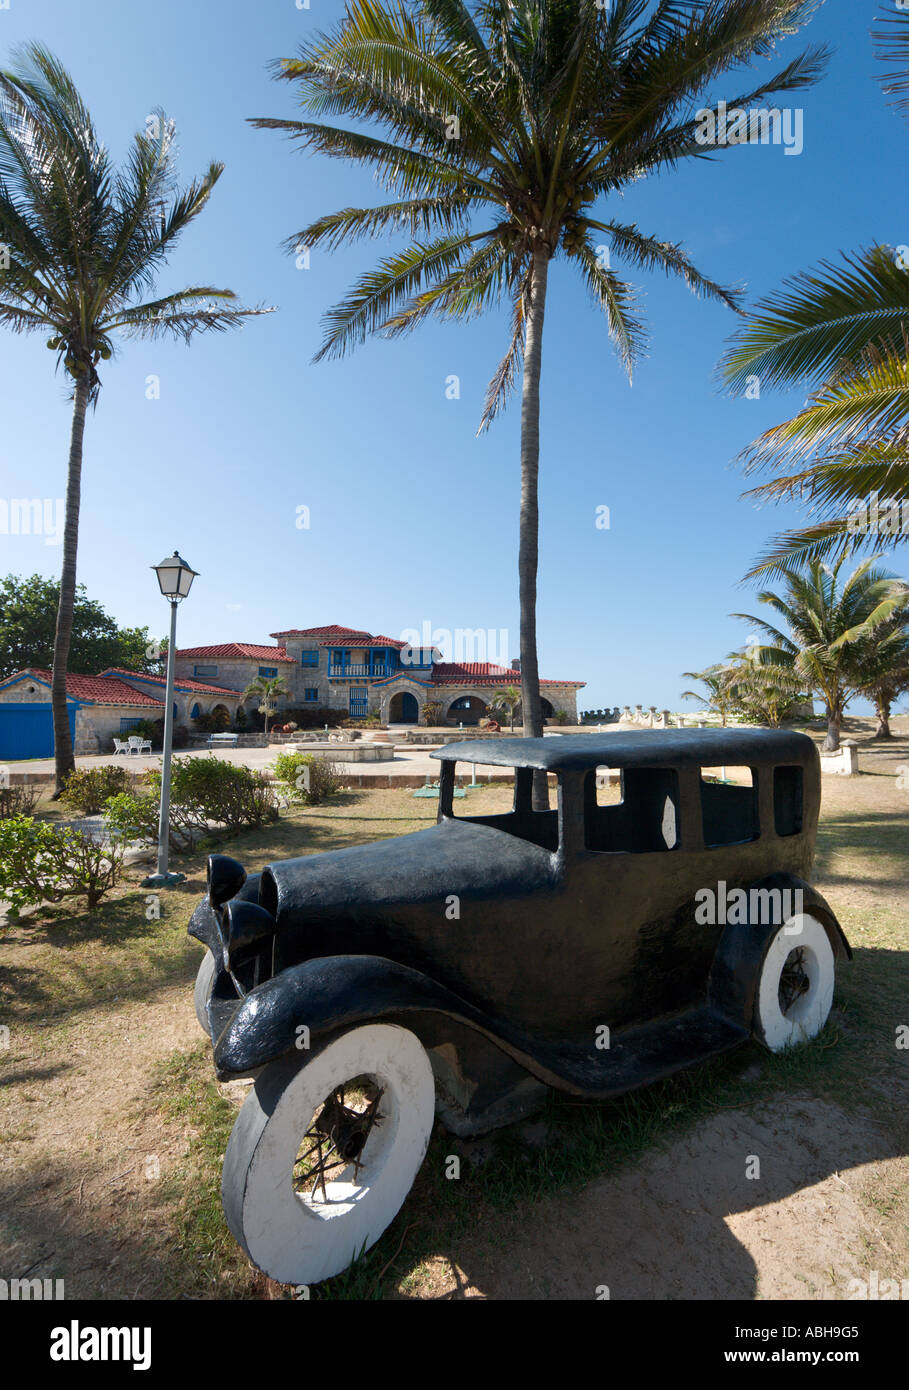 Model of a 1920's car in front of La Casa de Al Restaurant (the former vacation home of Al Capone), Varadero, Cuba Stock Photo